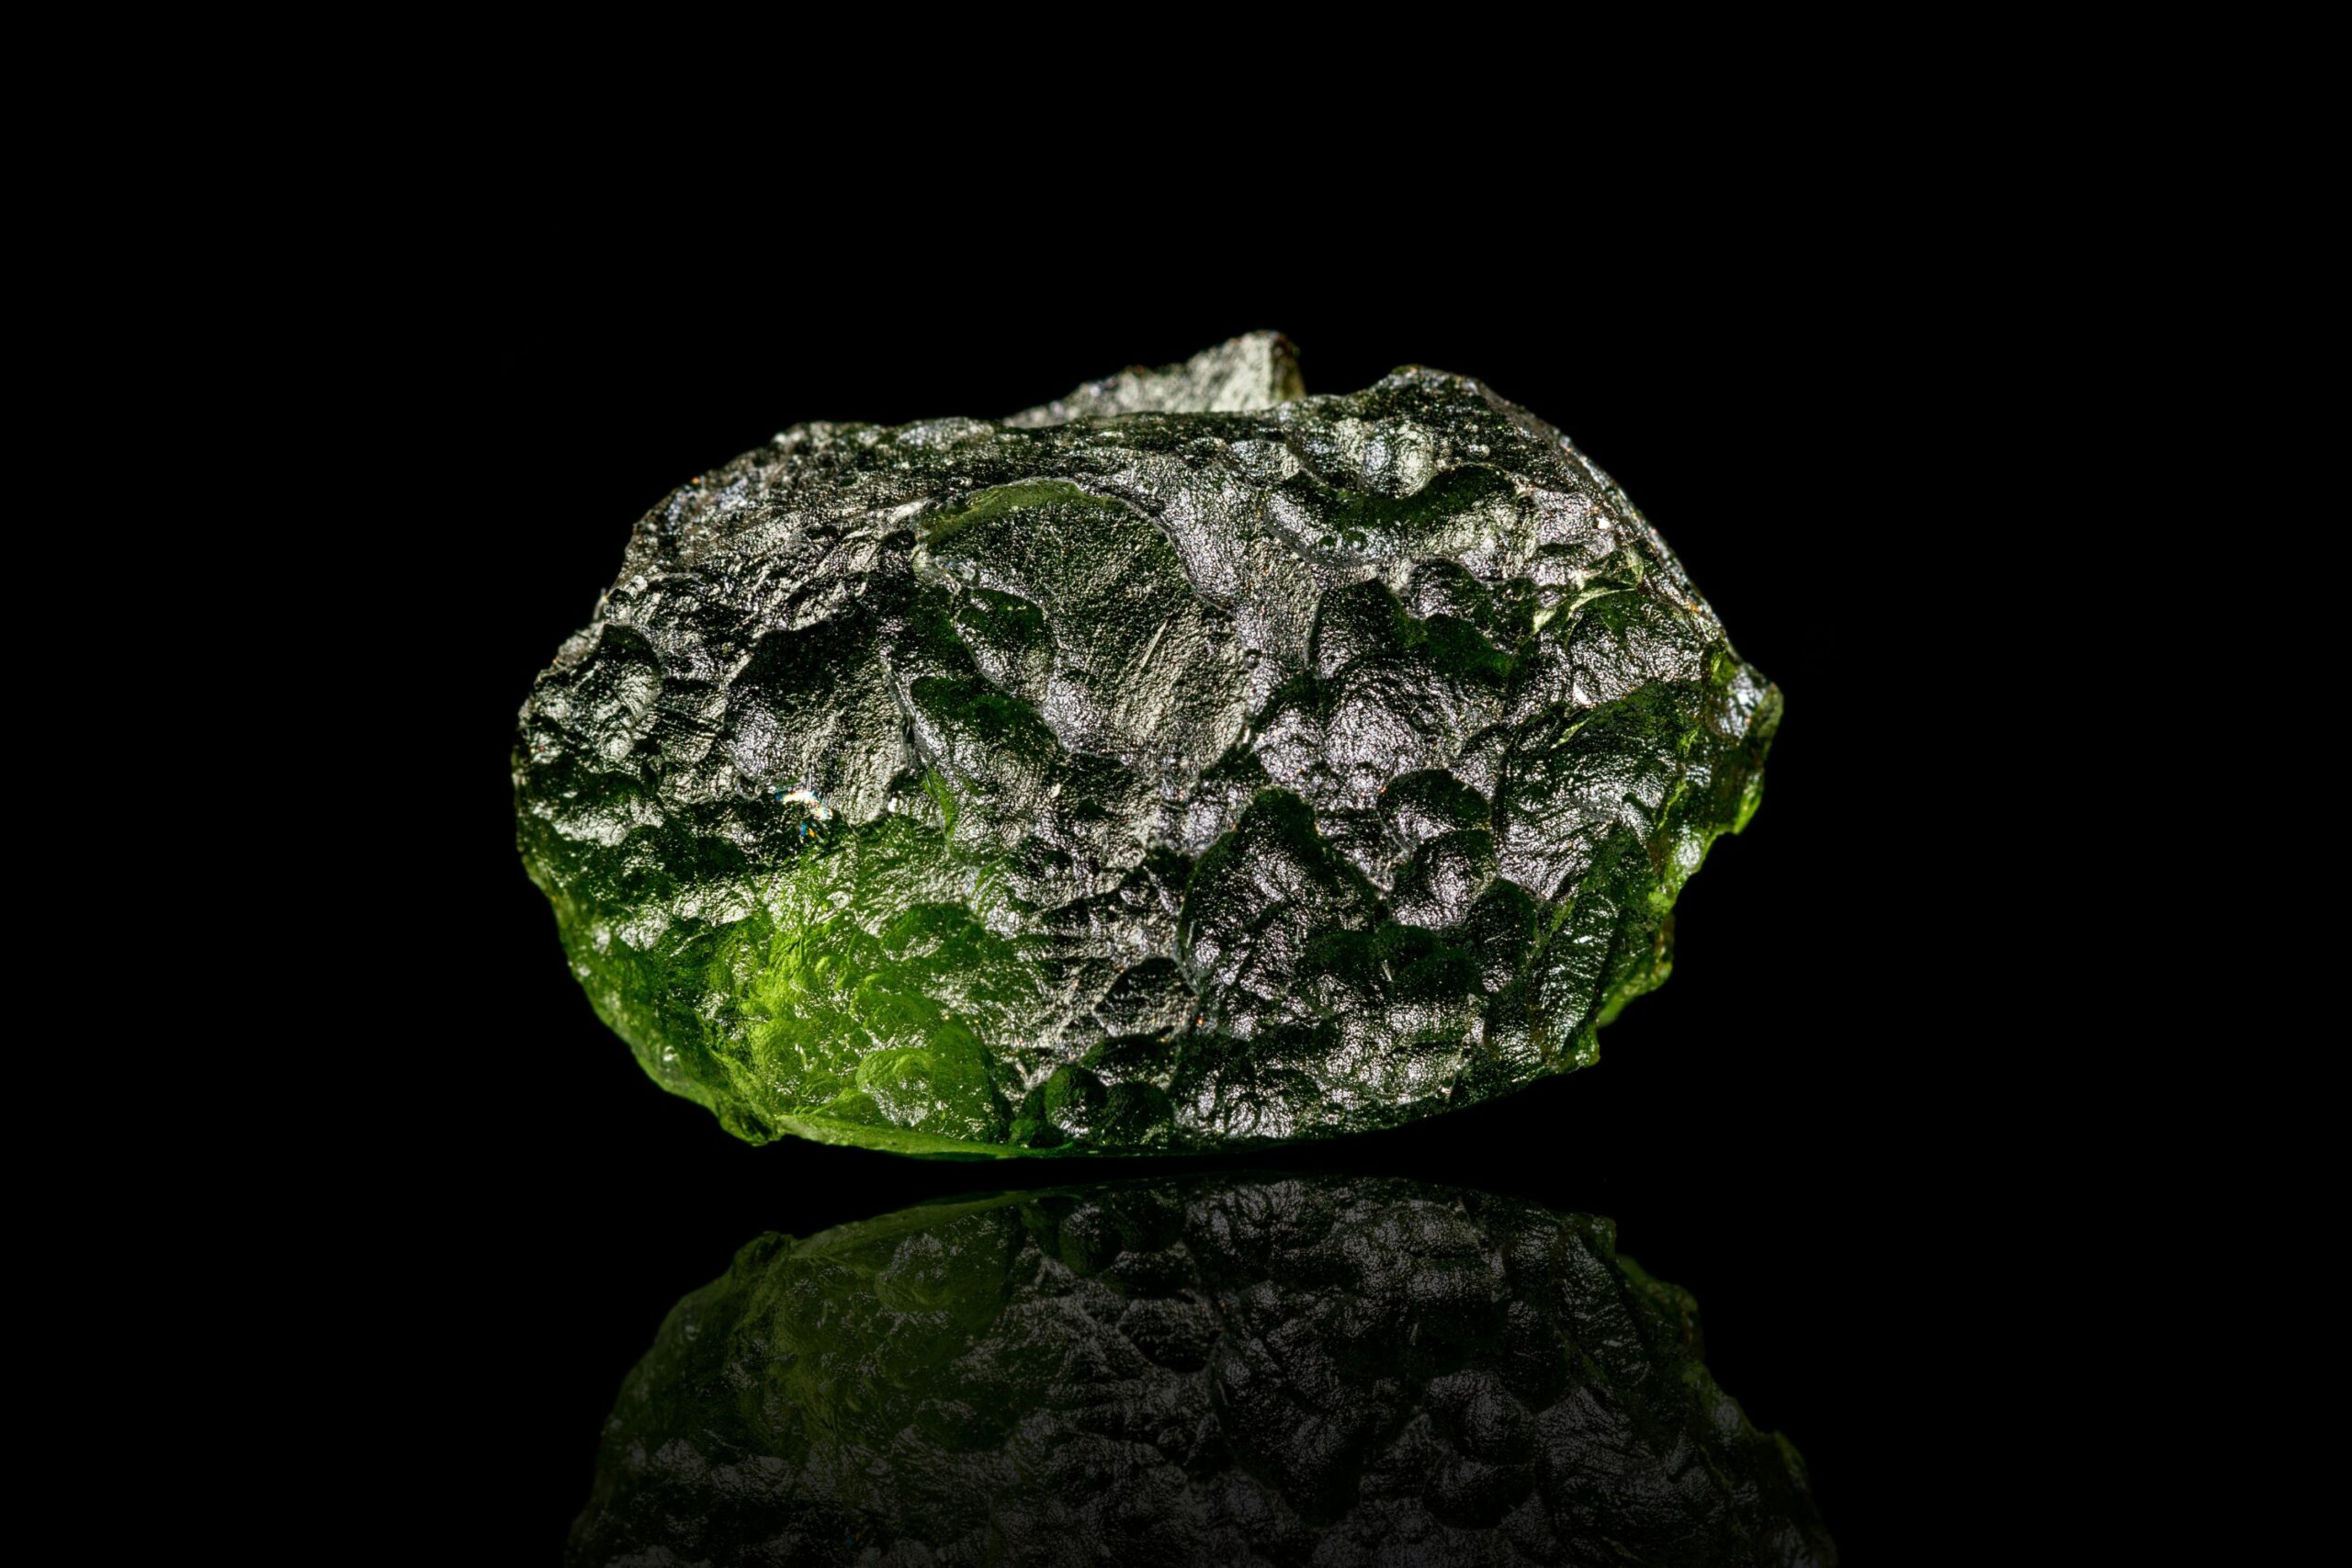 Green moldavite crystal on a reflective black surface